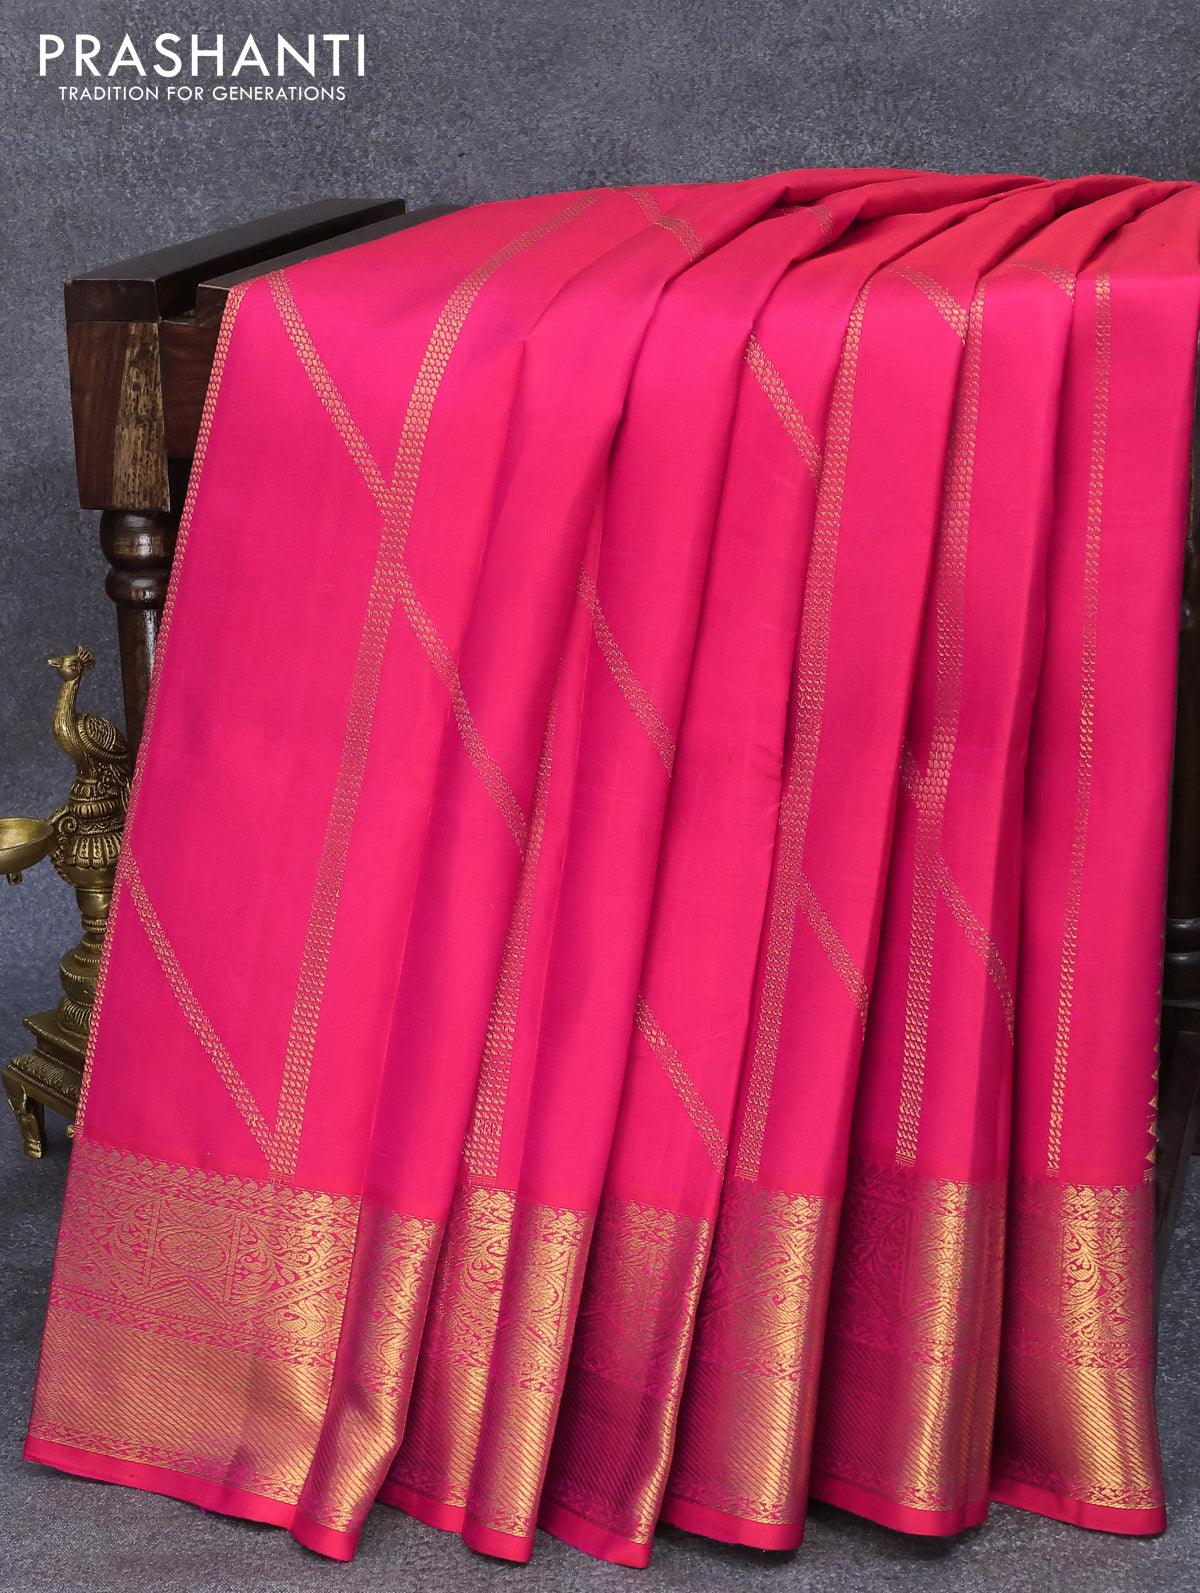 Lotus Pink Soft Silk Saree | Silk Mark Certified